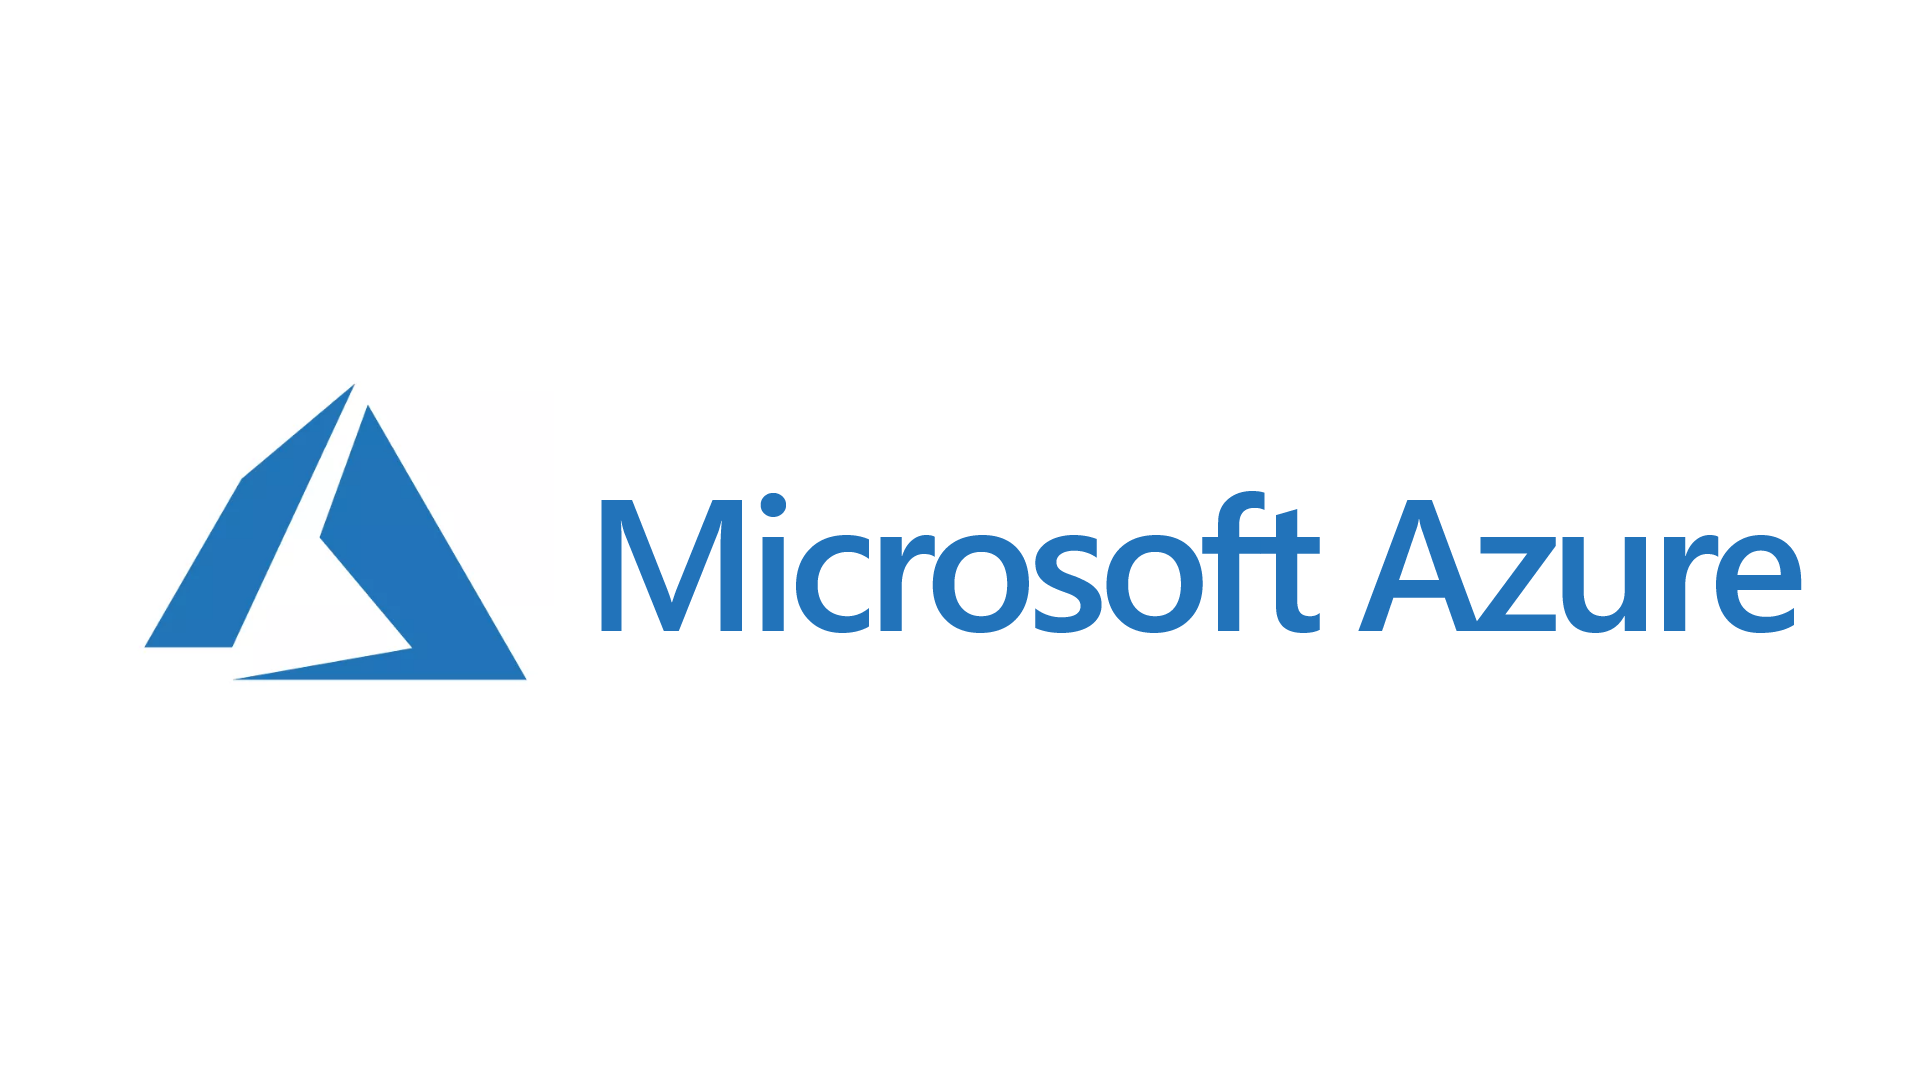 Microsoft Azure Memperlihatkan Penggunaan Yang. Sangat Tinggi Sepanjang Wabak COVID-19